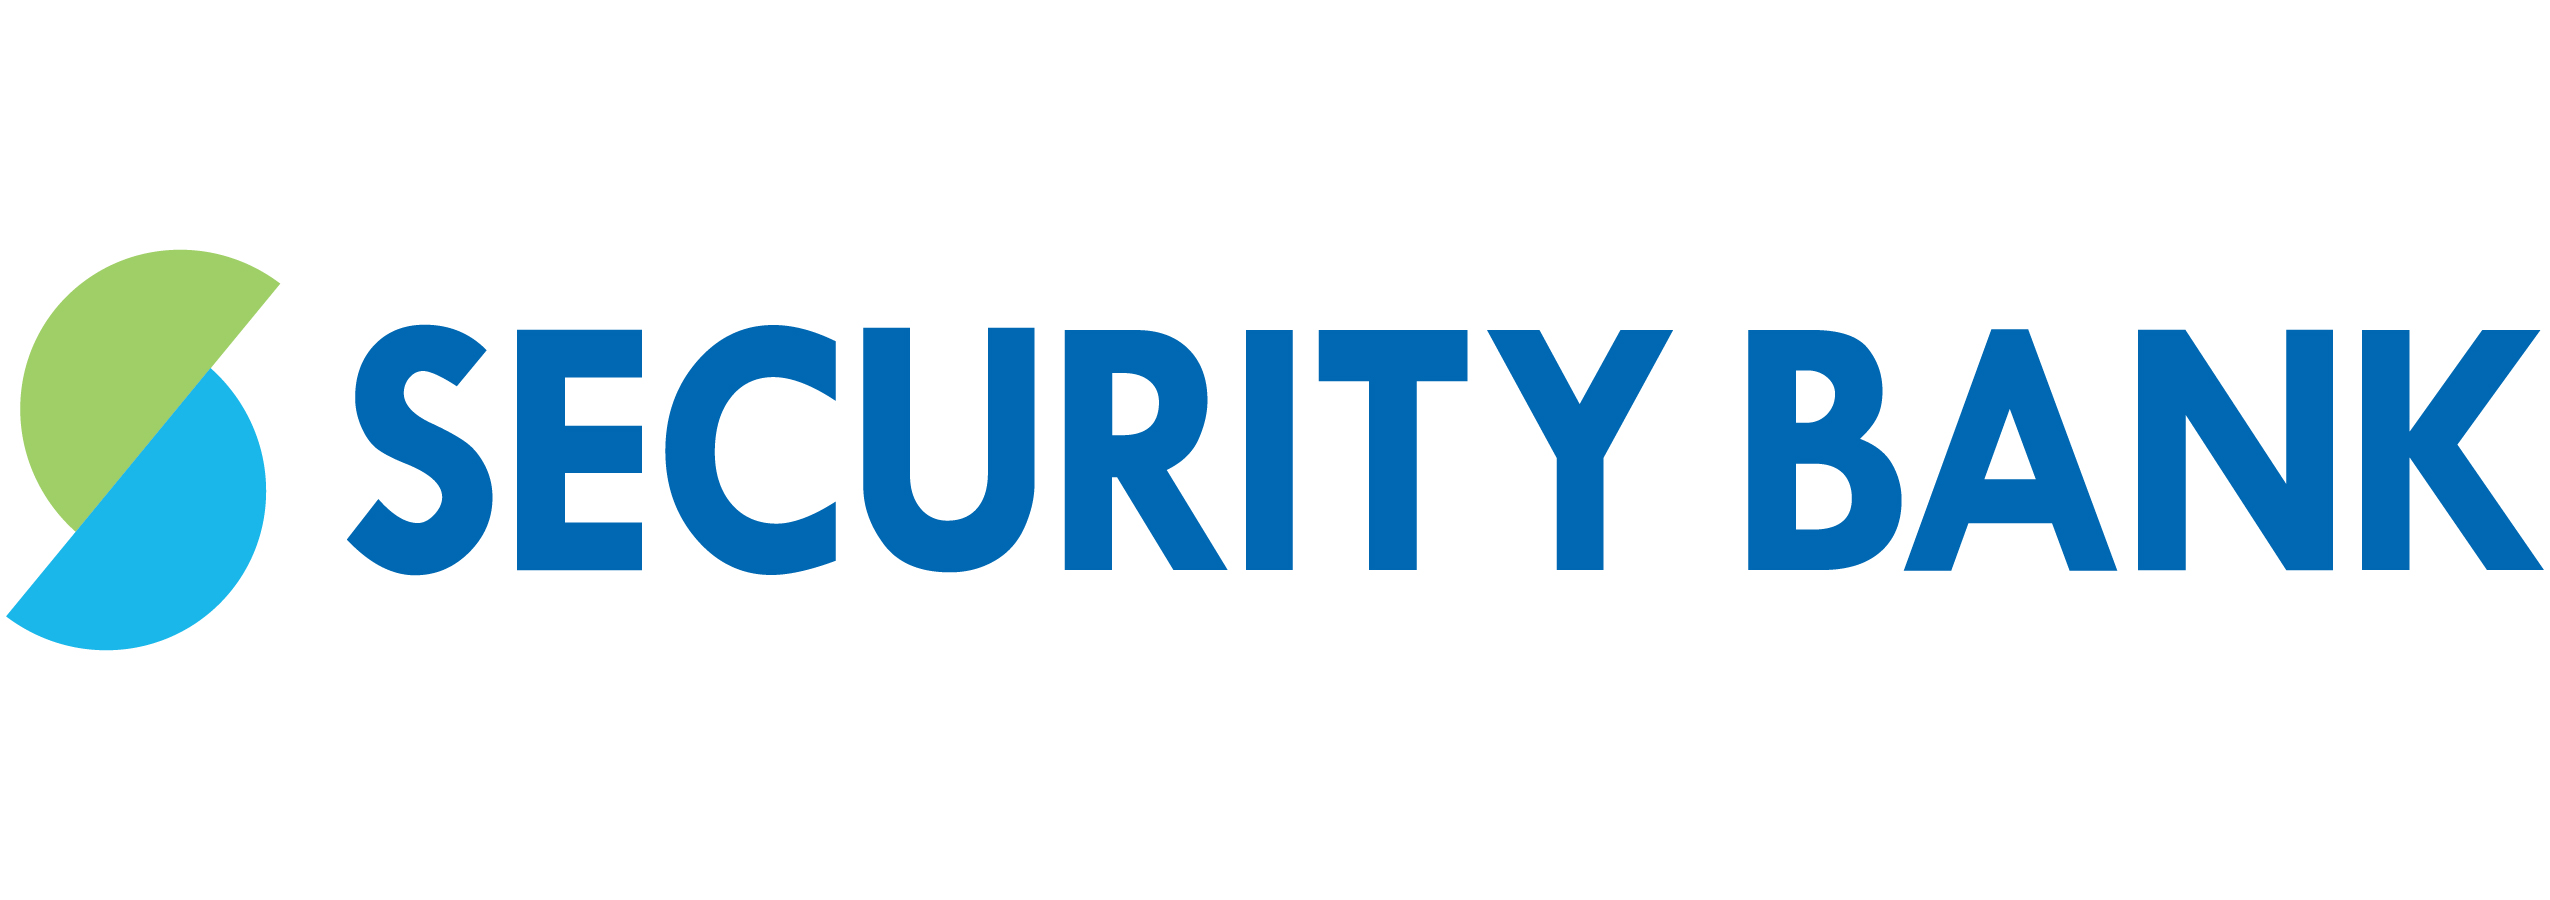 Security Bank Brand Logo